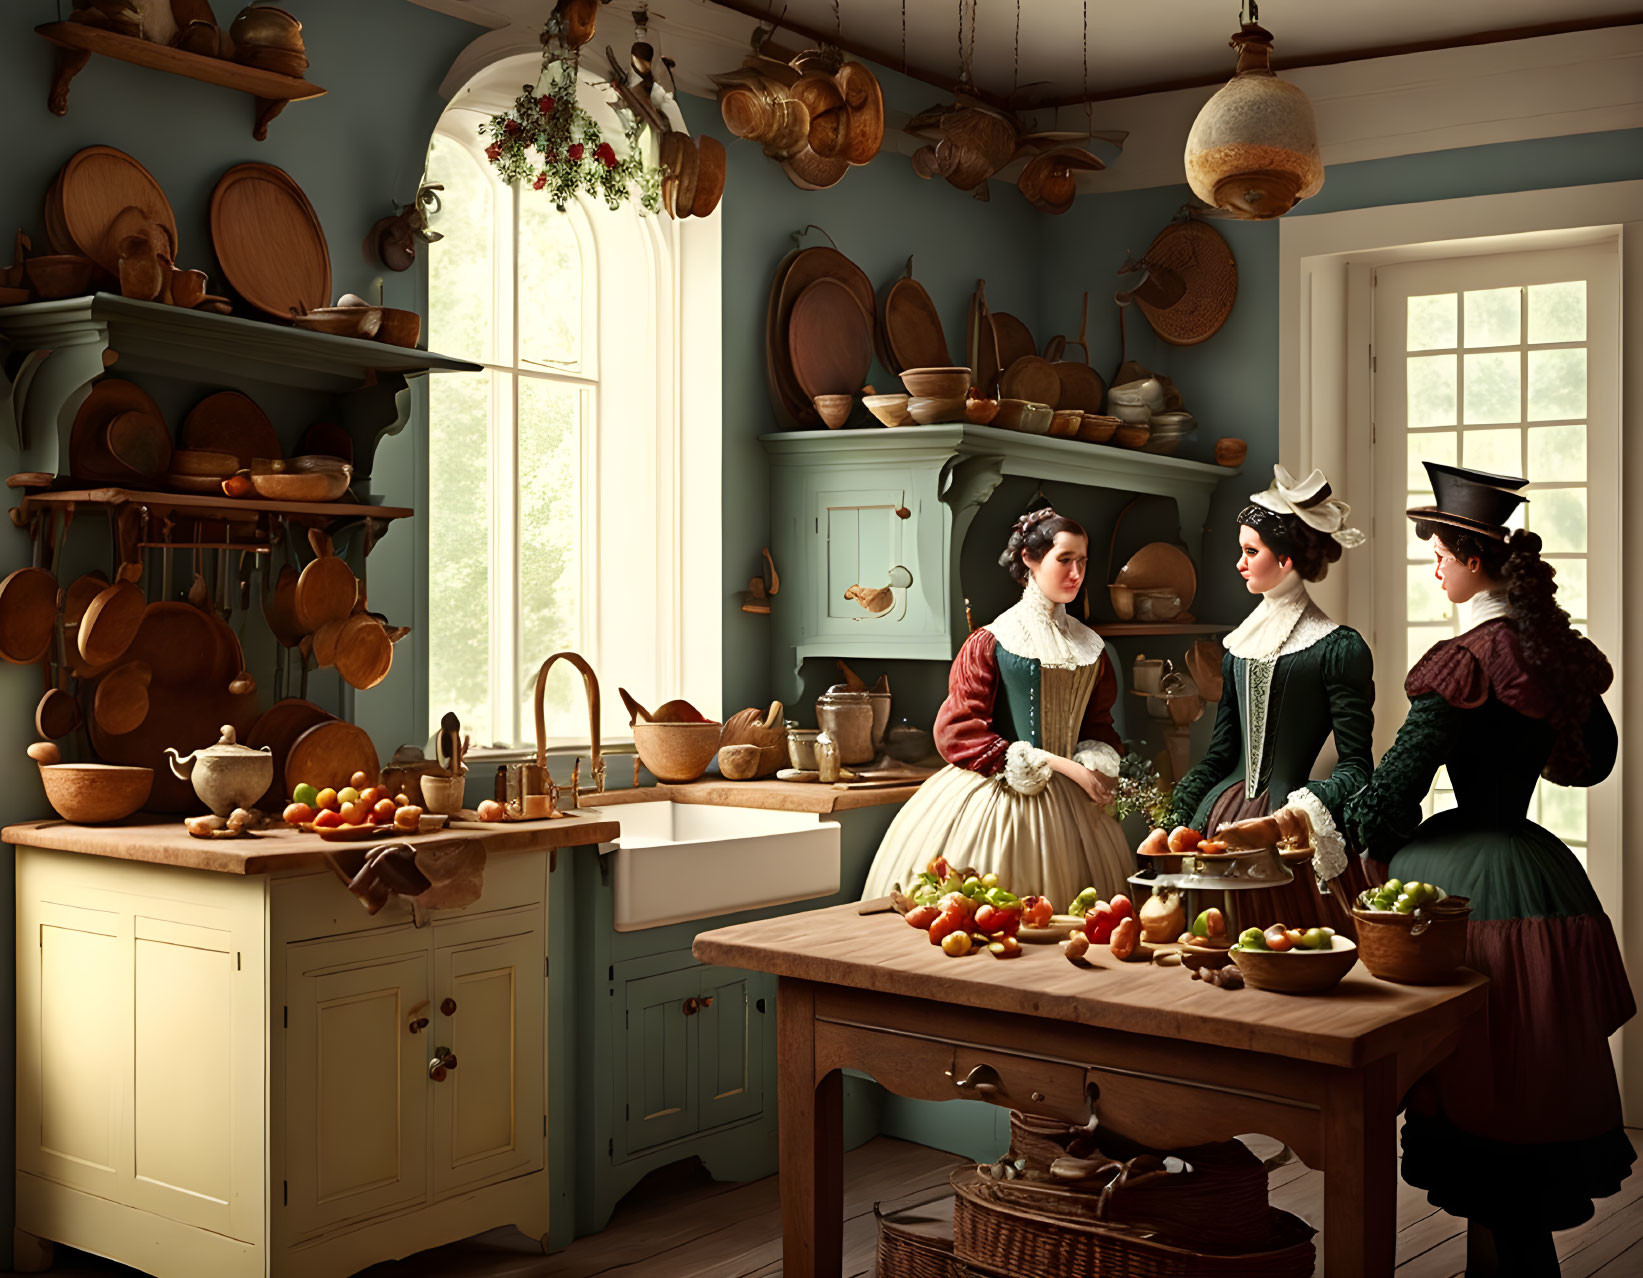 Vintage Attired Women Chat in Rustic Kitchen